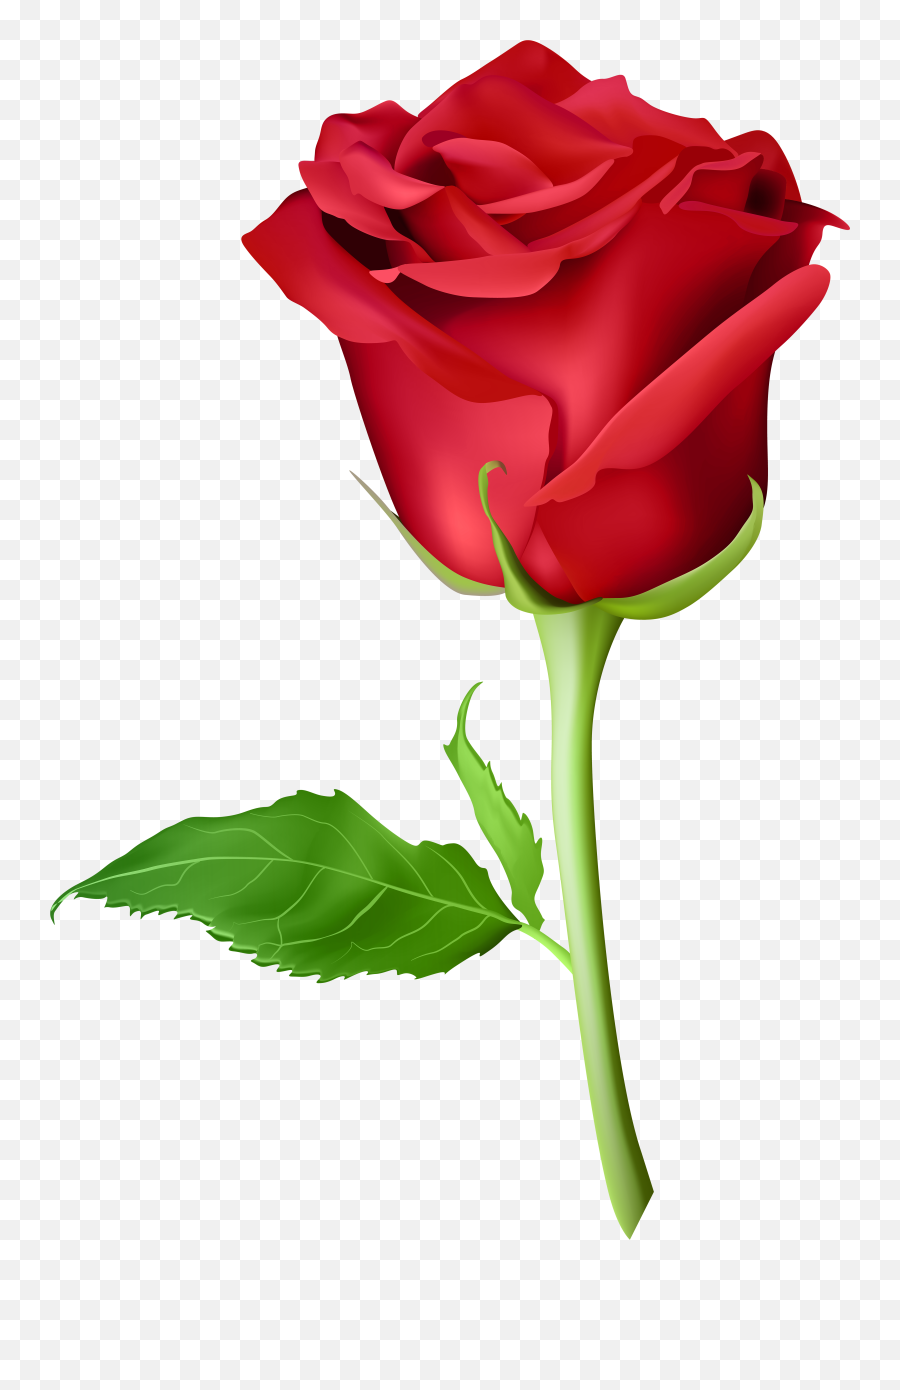 Rose Png Flower Images Free Download - Blue Roses Images Hd,Red Rose Png